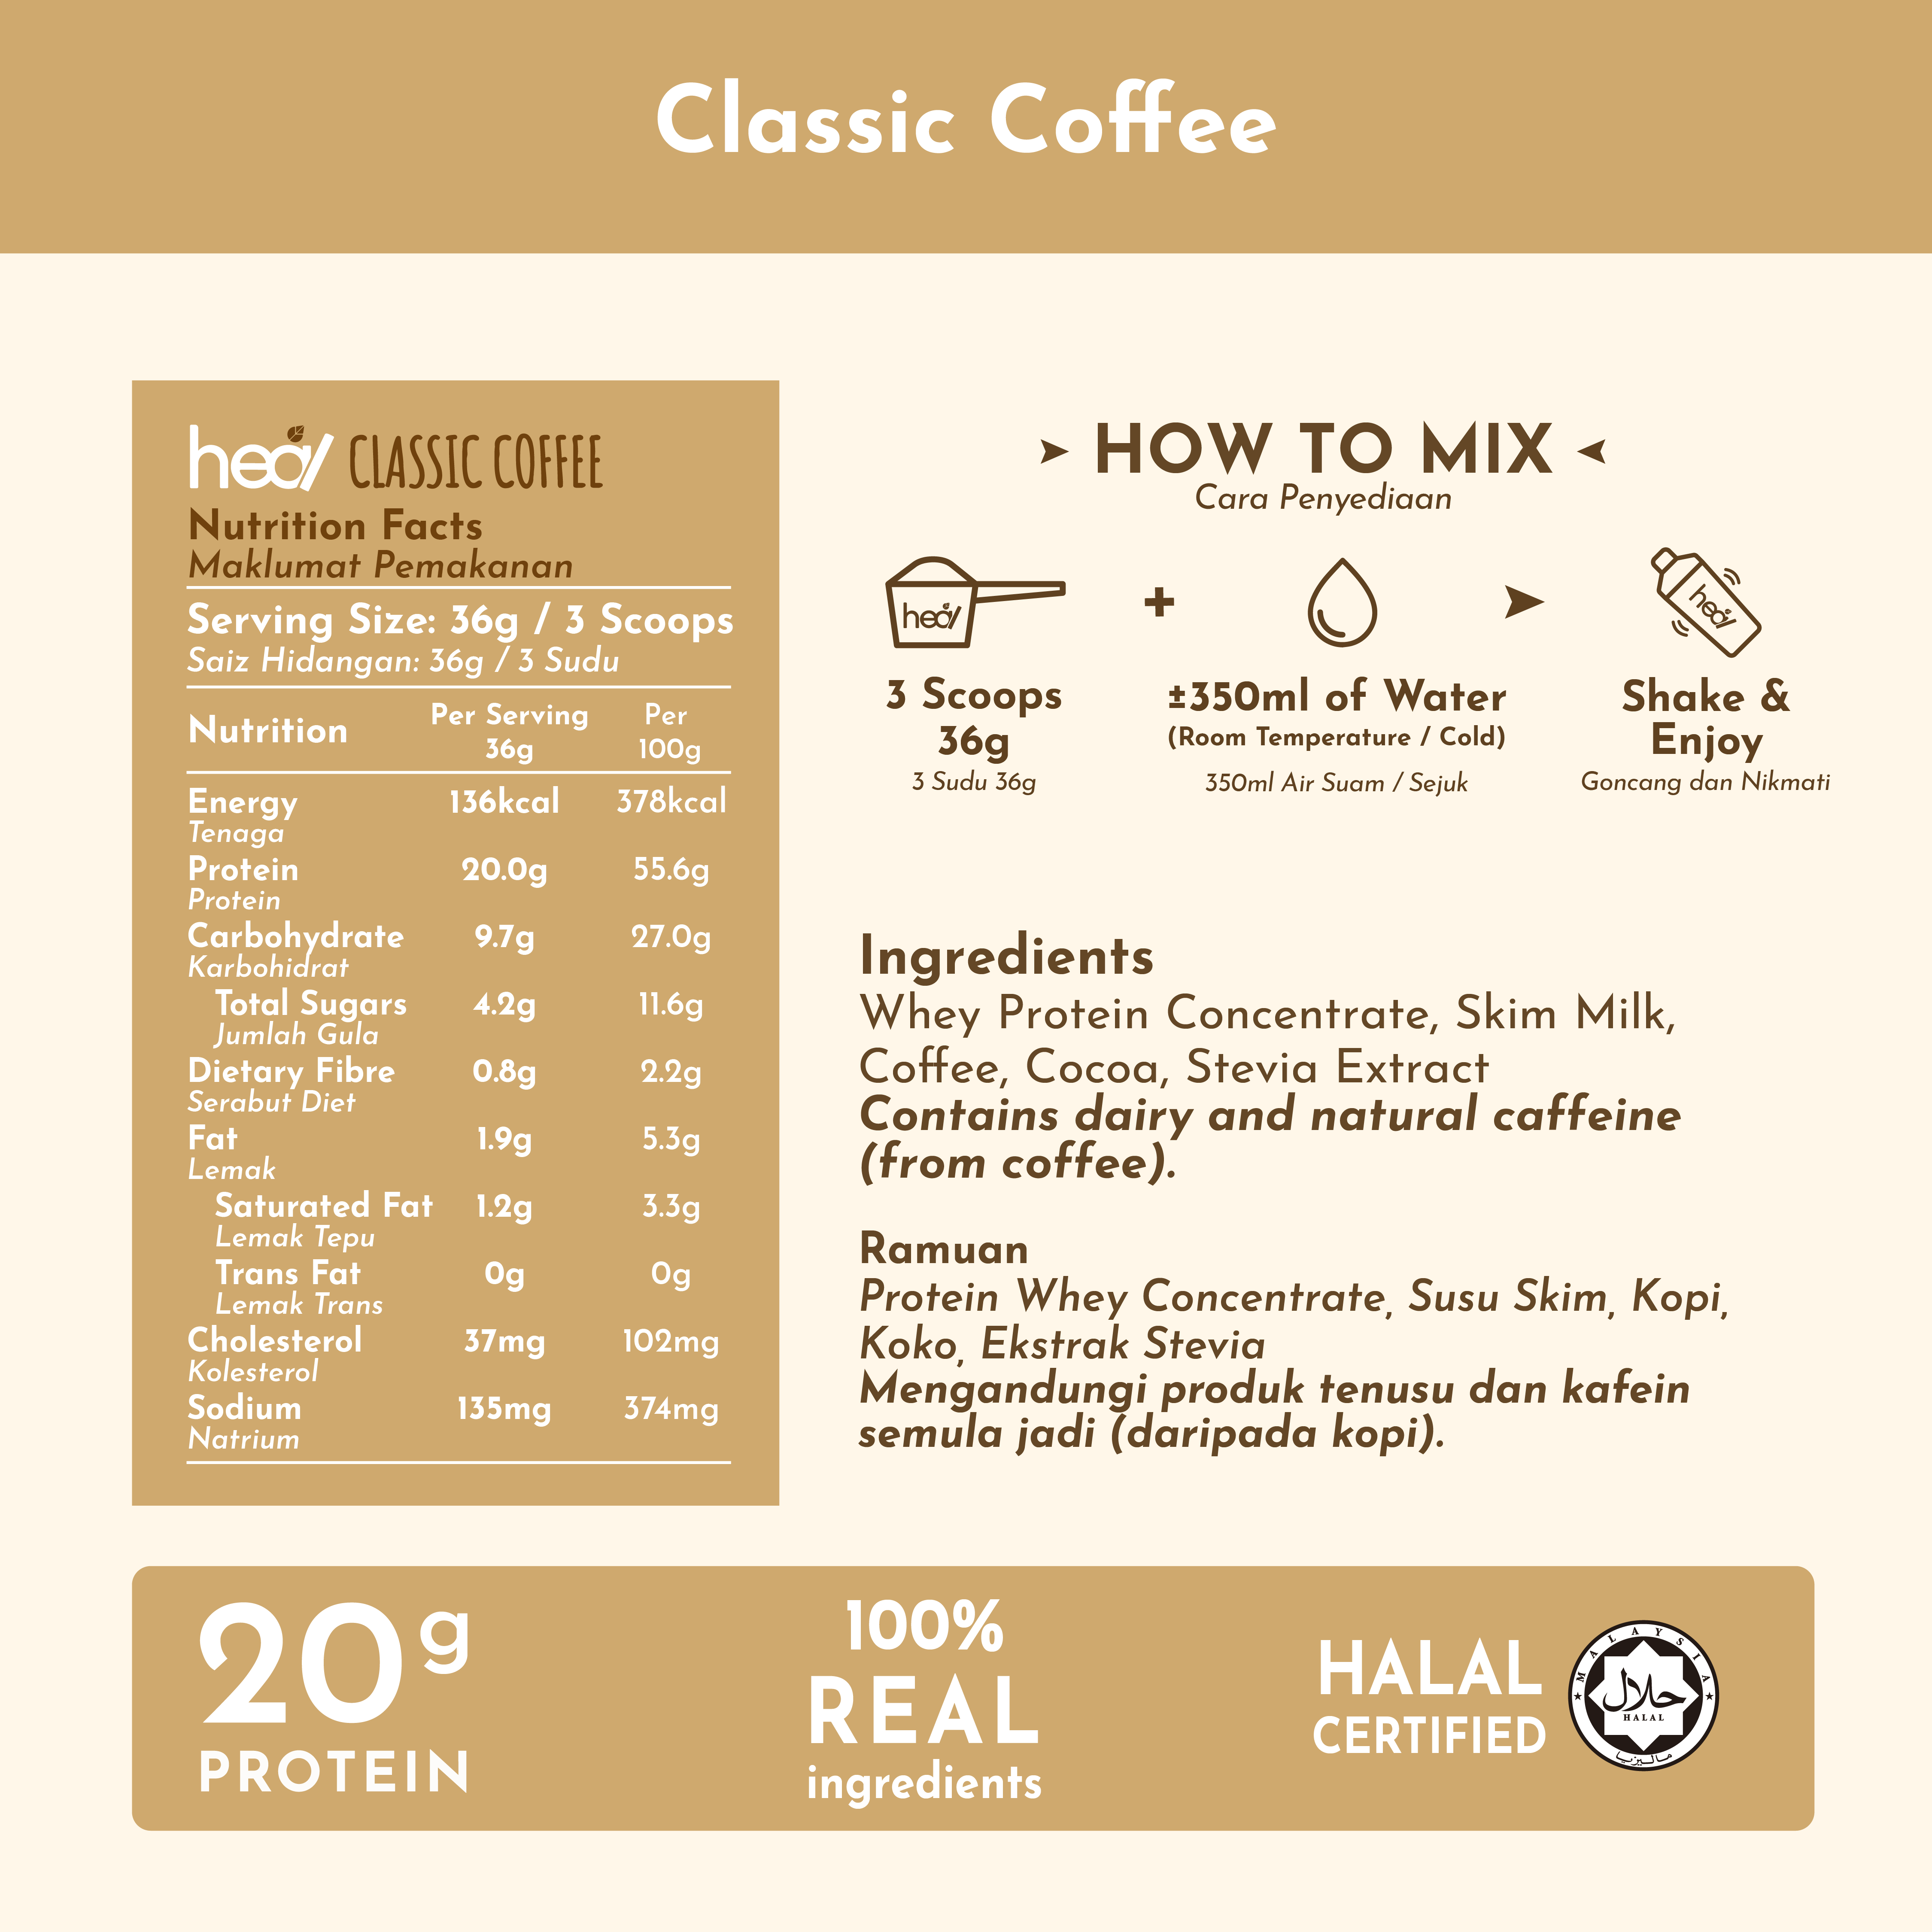 Heal Classic Coffee Protein Shake 3x Sachets Bundle (36g)